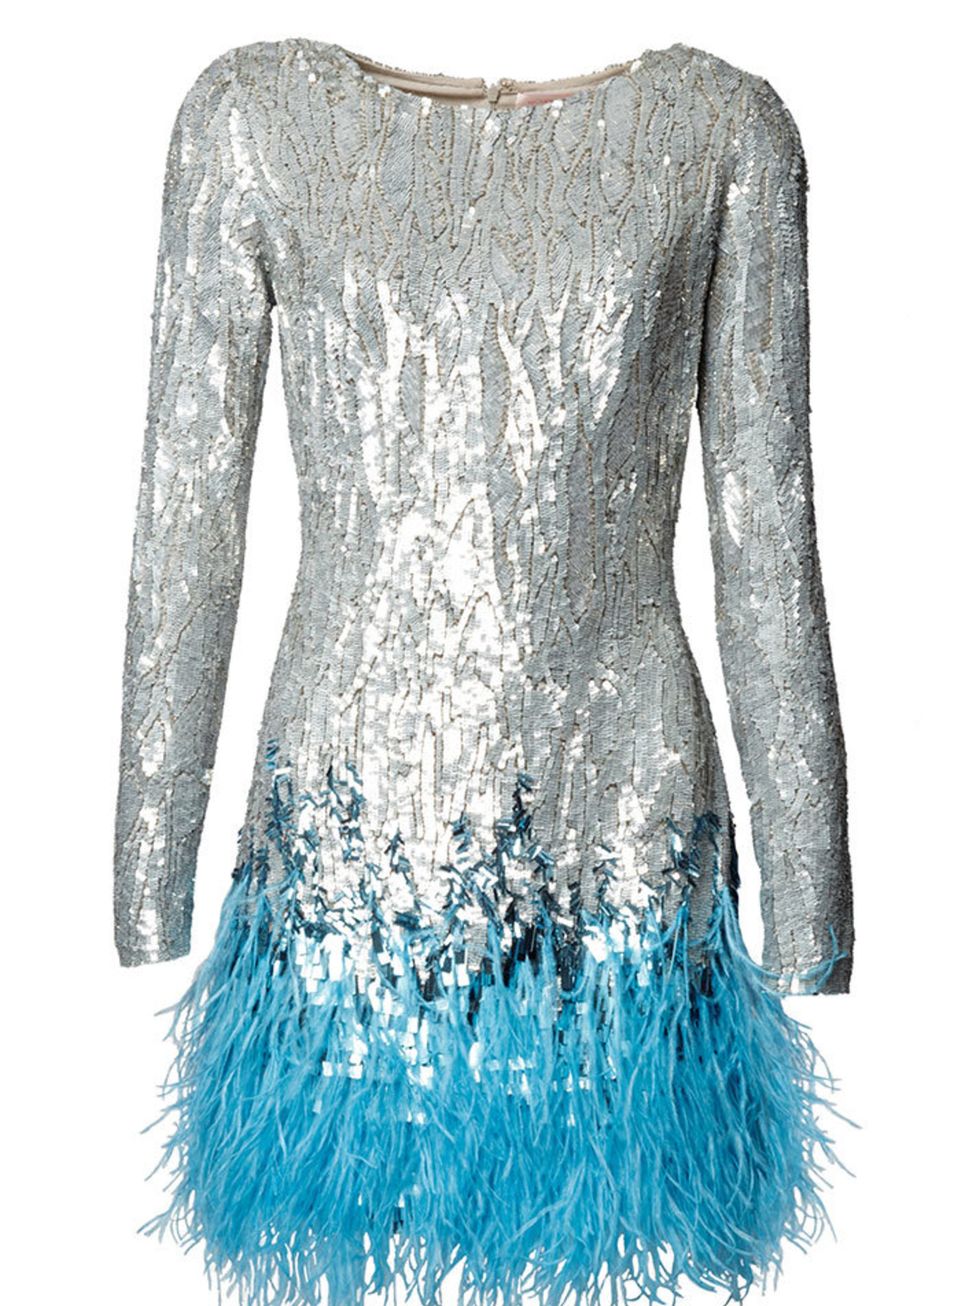 <p>Silver Liquid Sequin Feather Trimmed Mini Dress,</p>

<p><a href="http://www.matthewwilliamson.com/shop/product/9204/liquid-sequin-feather-trimmed-mini-dress">Buy online</a></p>